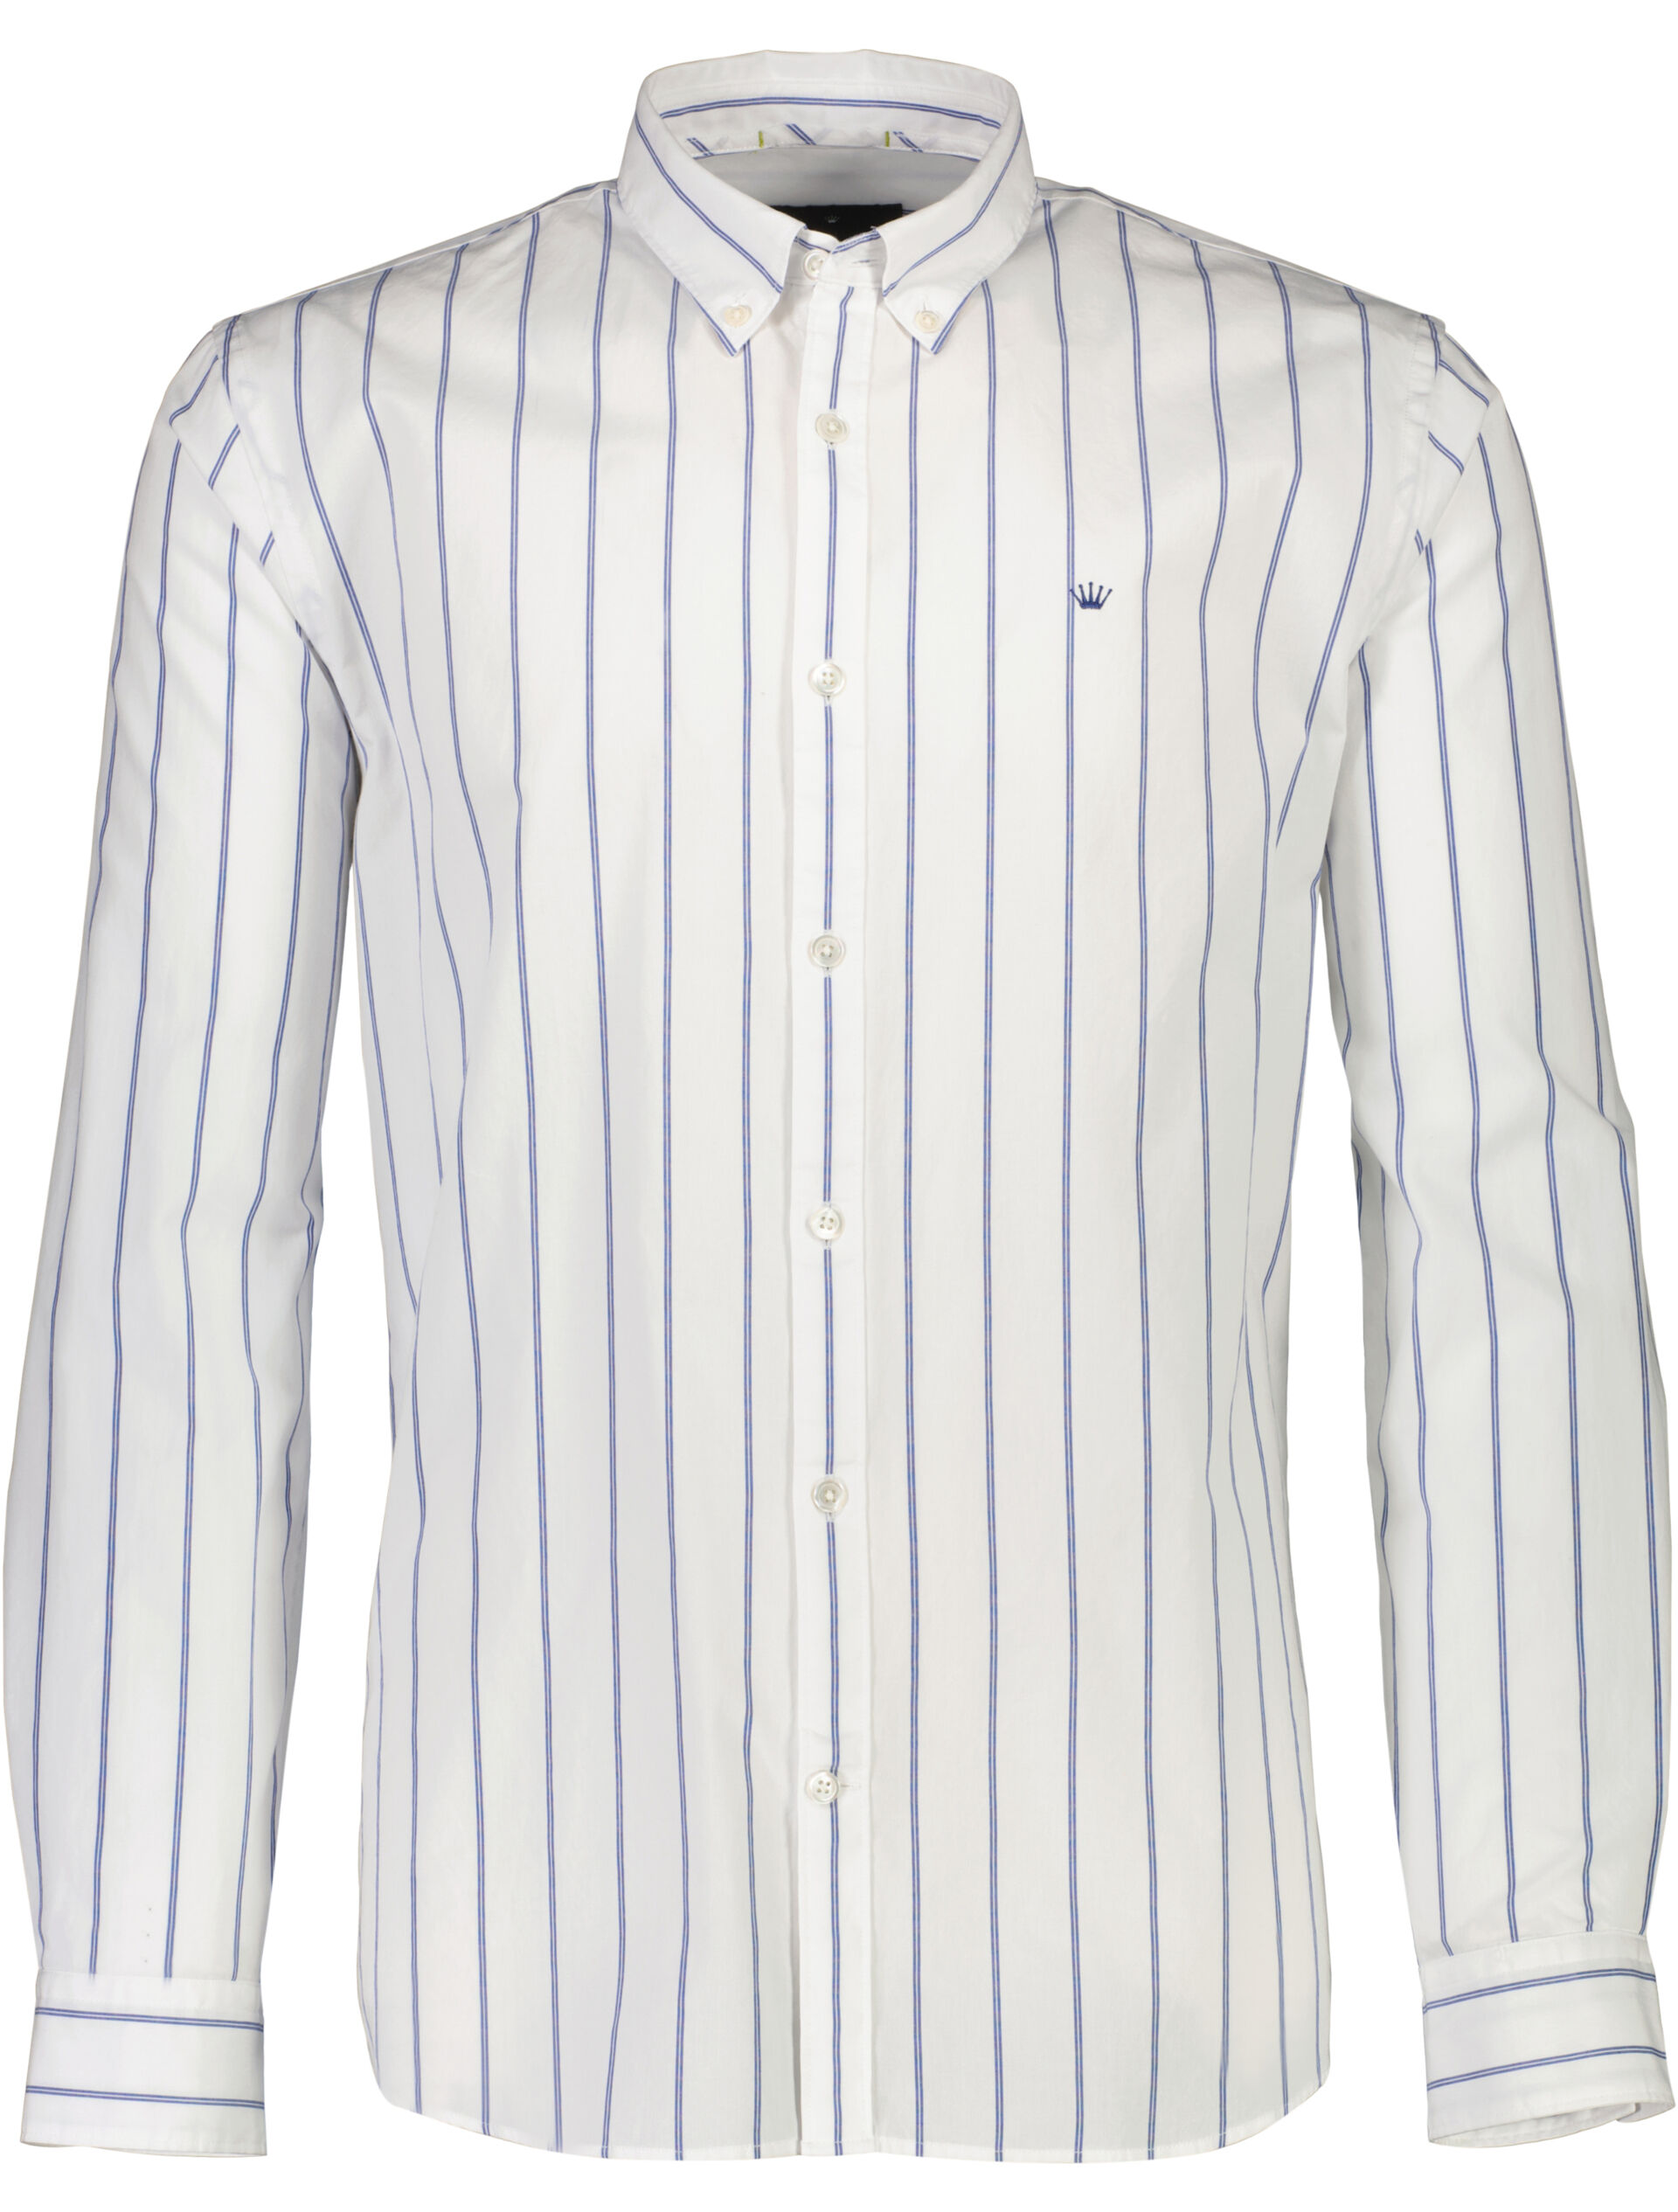 Oxford shirt Oxford shirt White 60-202030